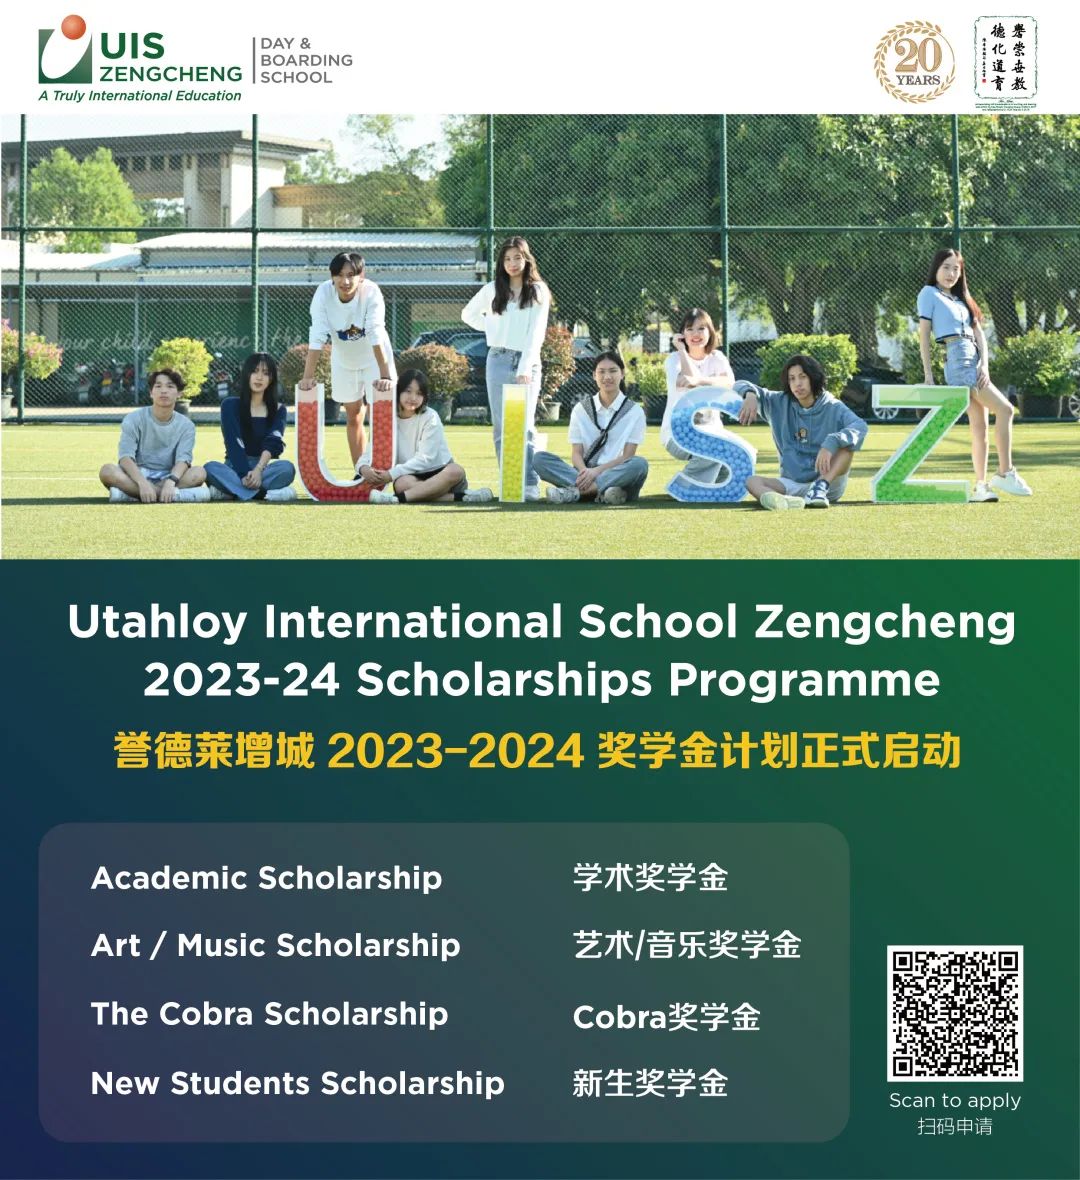 SCHOLARSHIPS丨UISZ 2023/24年度奖学金正式启动